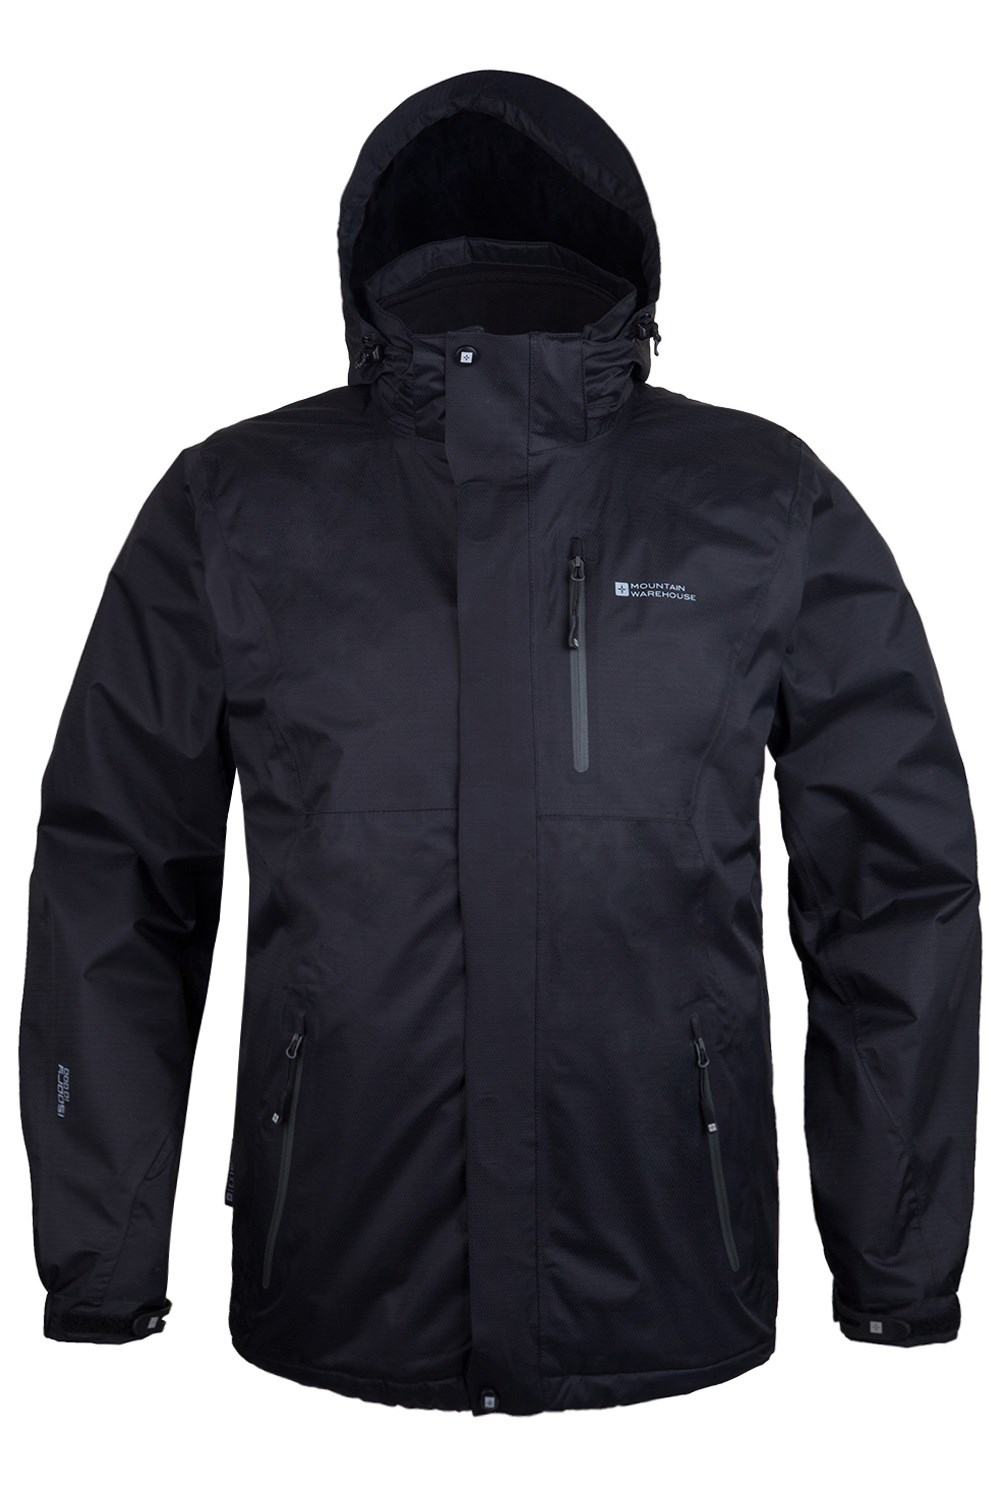 Mountain Warehouse Bracken Extreme 3 in 1 Mens Waterproof Jacket | eBay